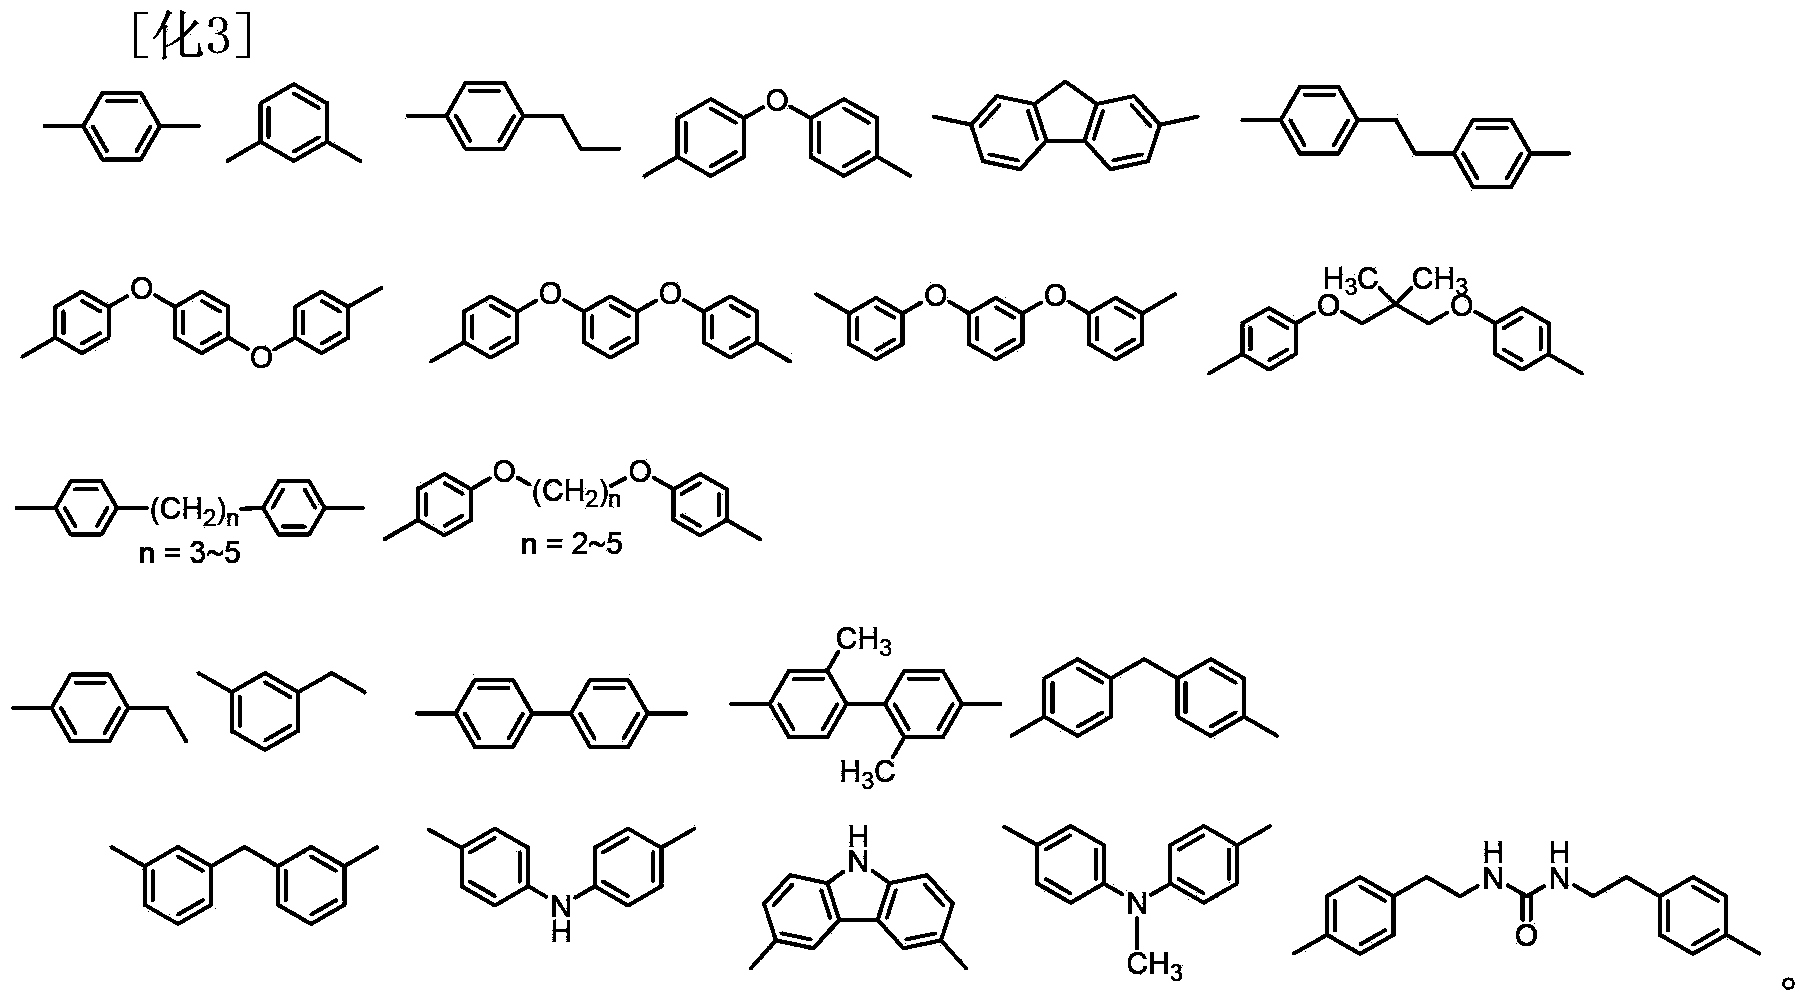 Liquid crystal alignment agent containing both polyamic acid ester and polyamic acid